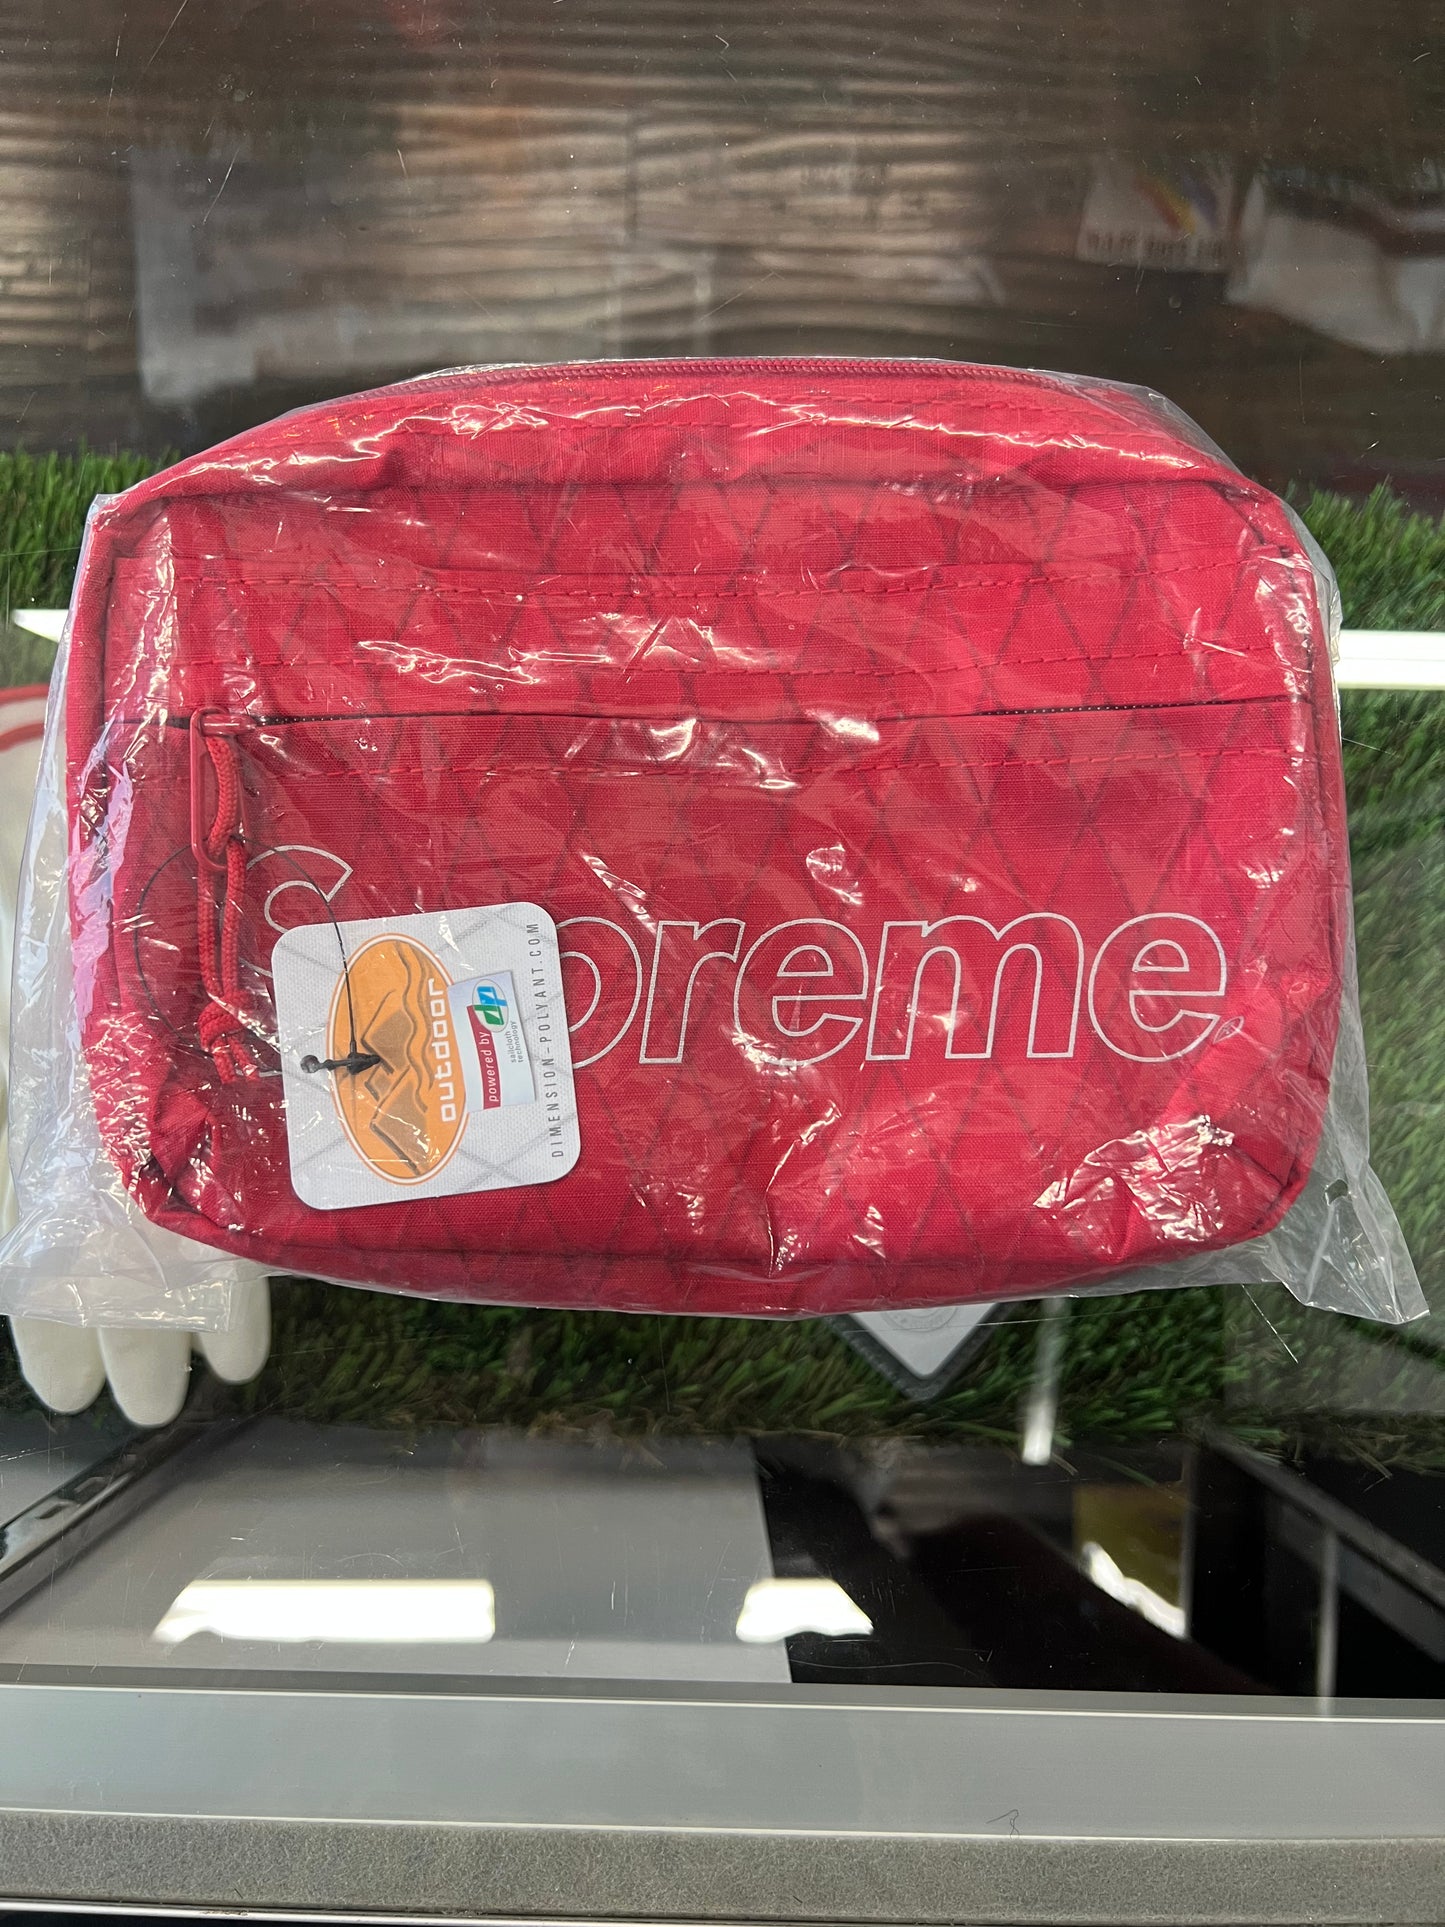 Buy Supreme Shoulder Bag 'Red' - FW18B10 RED - Red